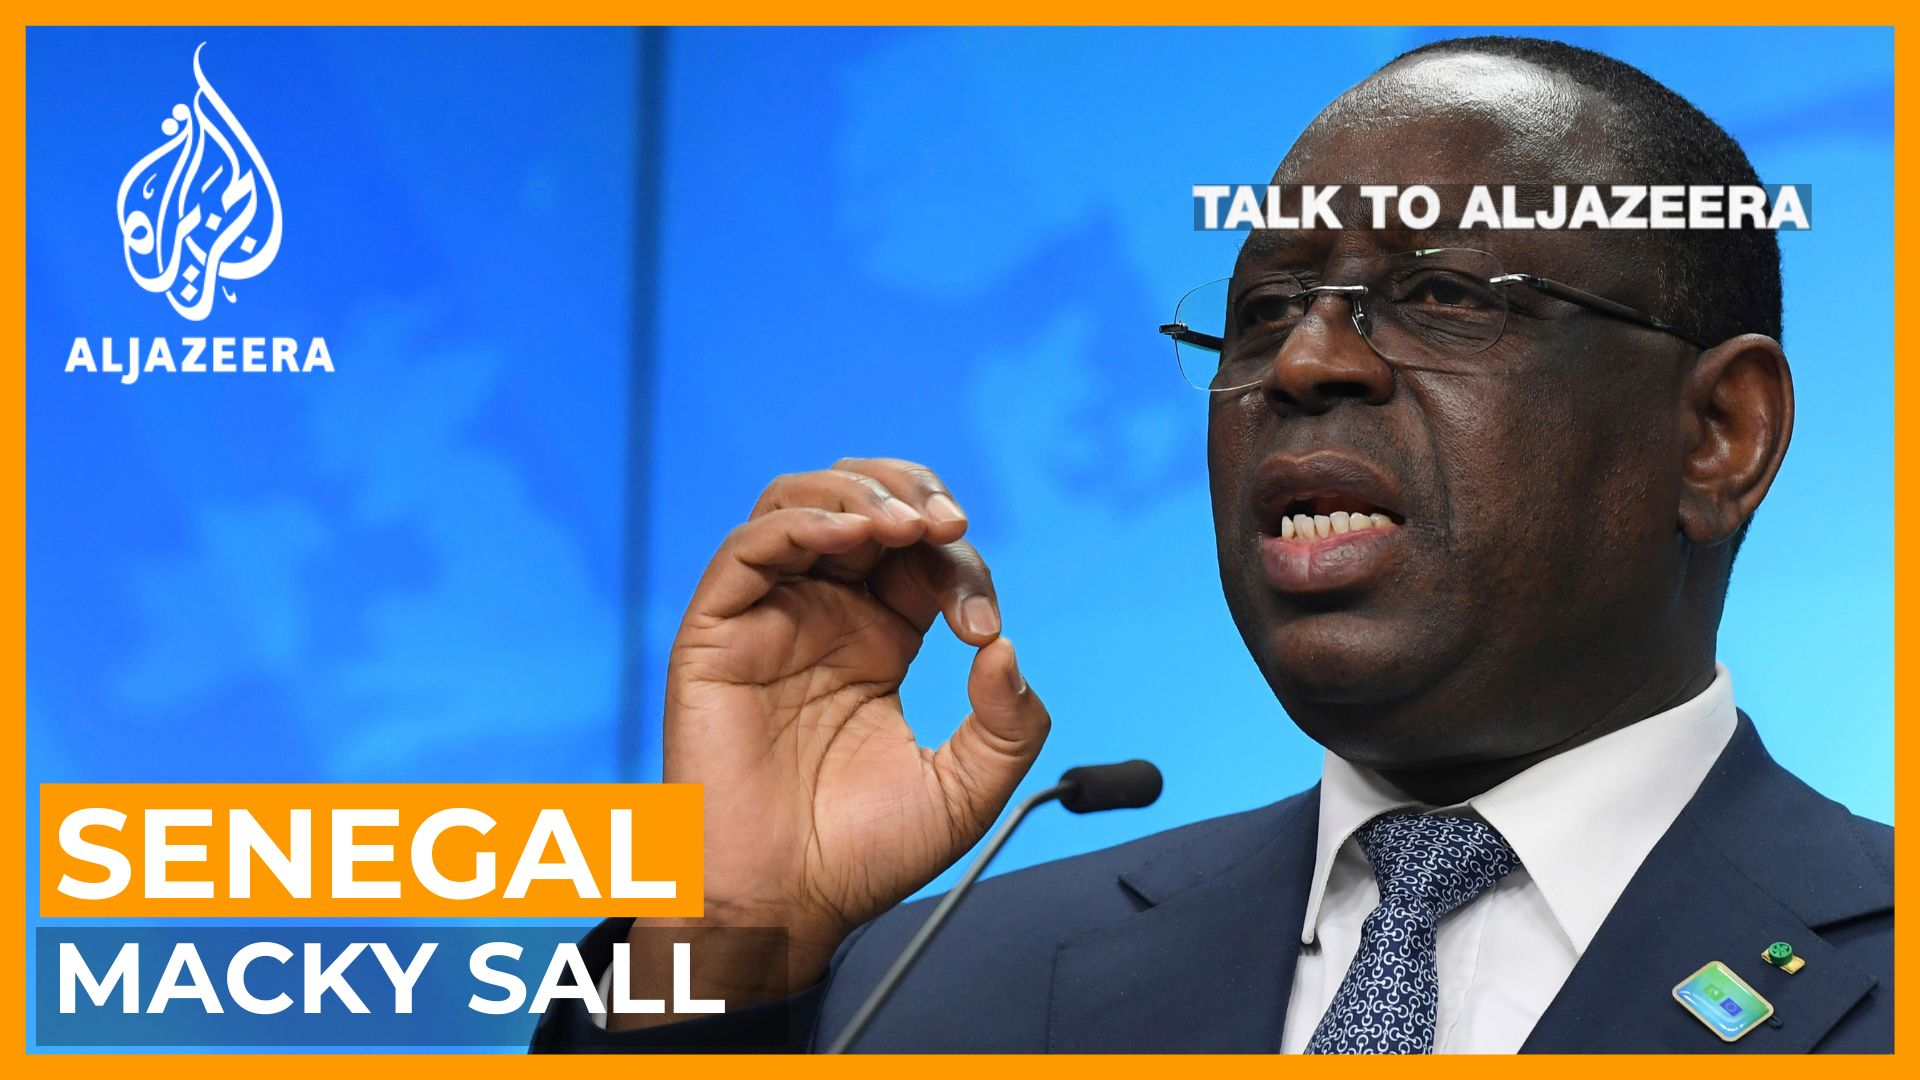 Macky Sall: Will Europe walk the talk on Africa's climate crisis? | Talk to Al Jazeera